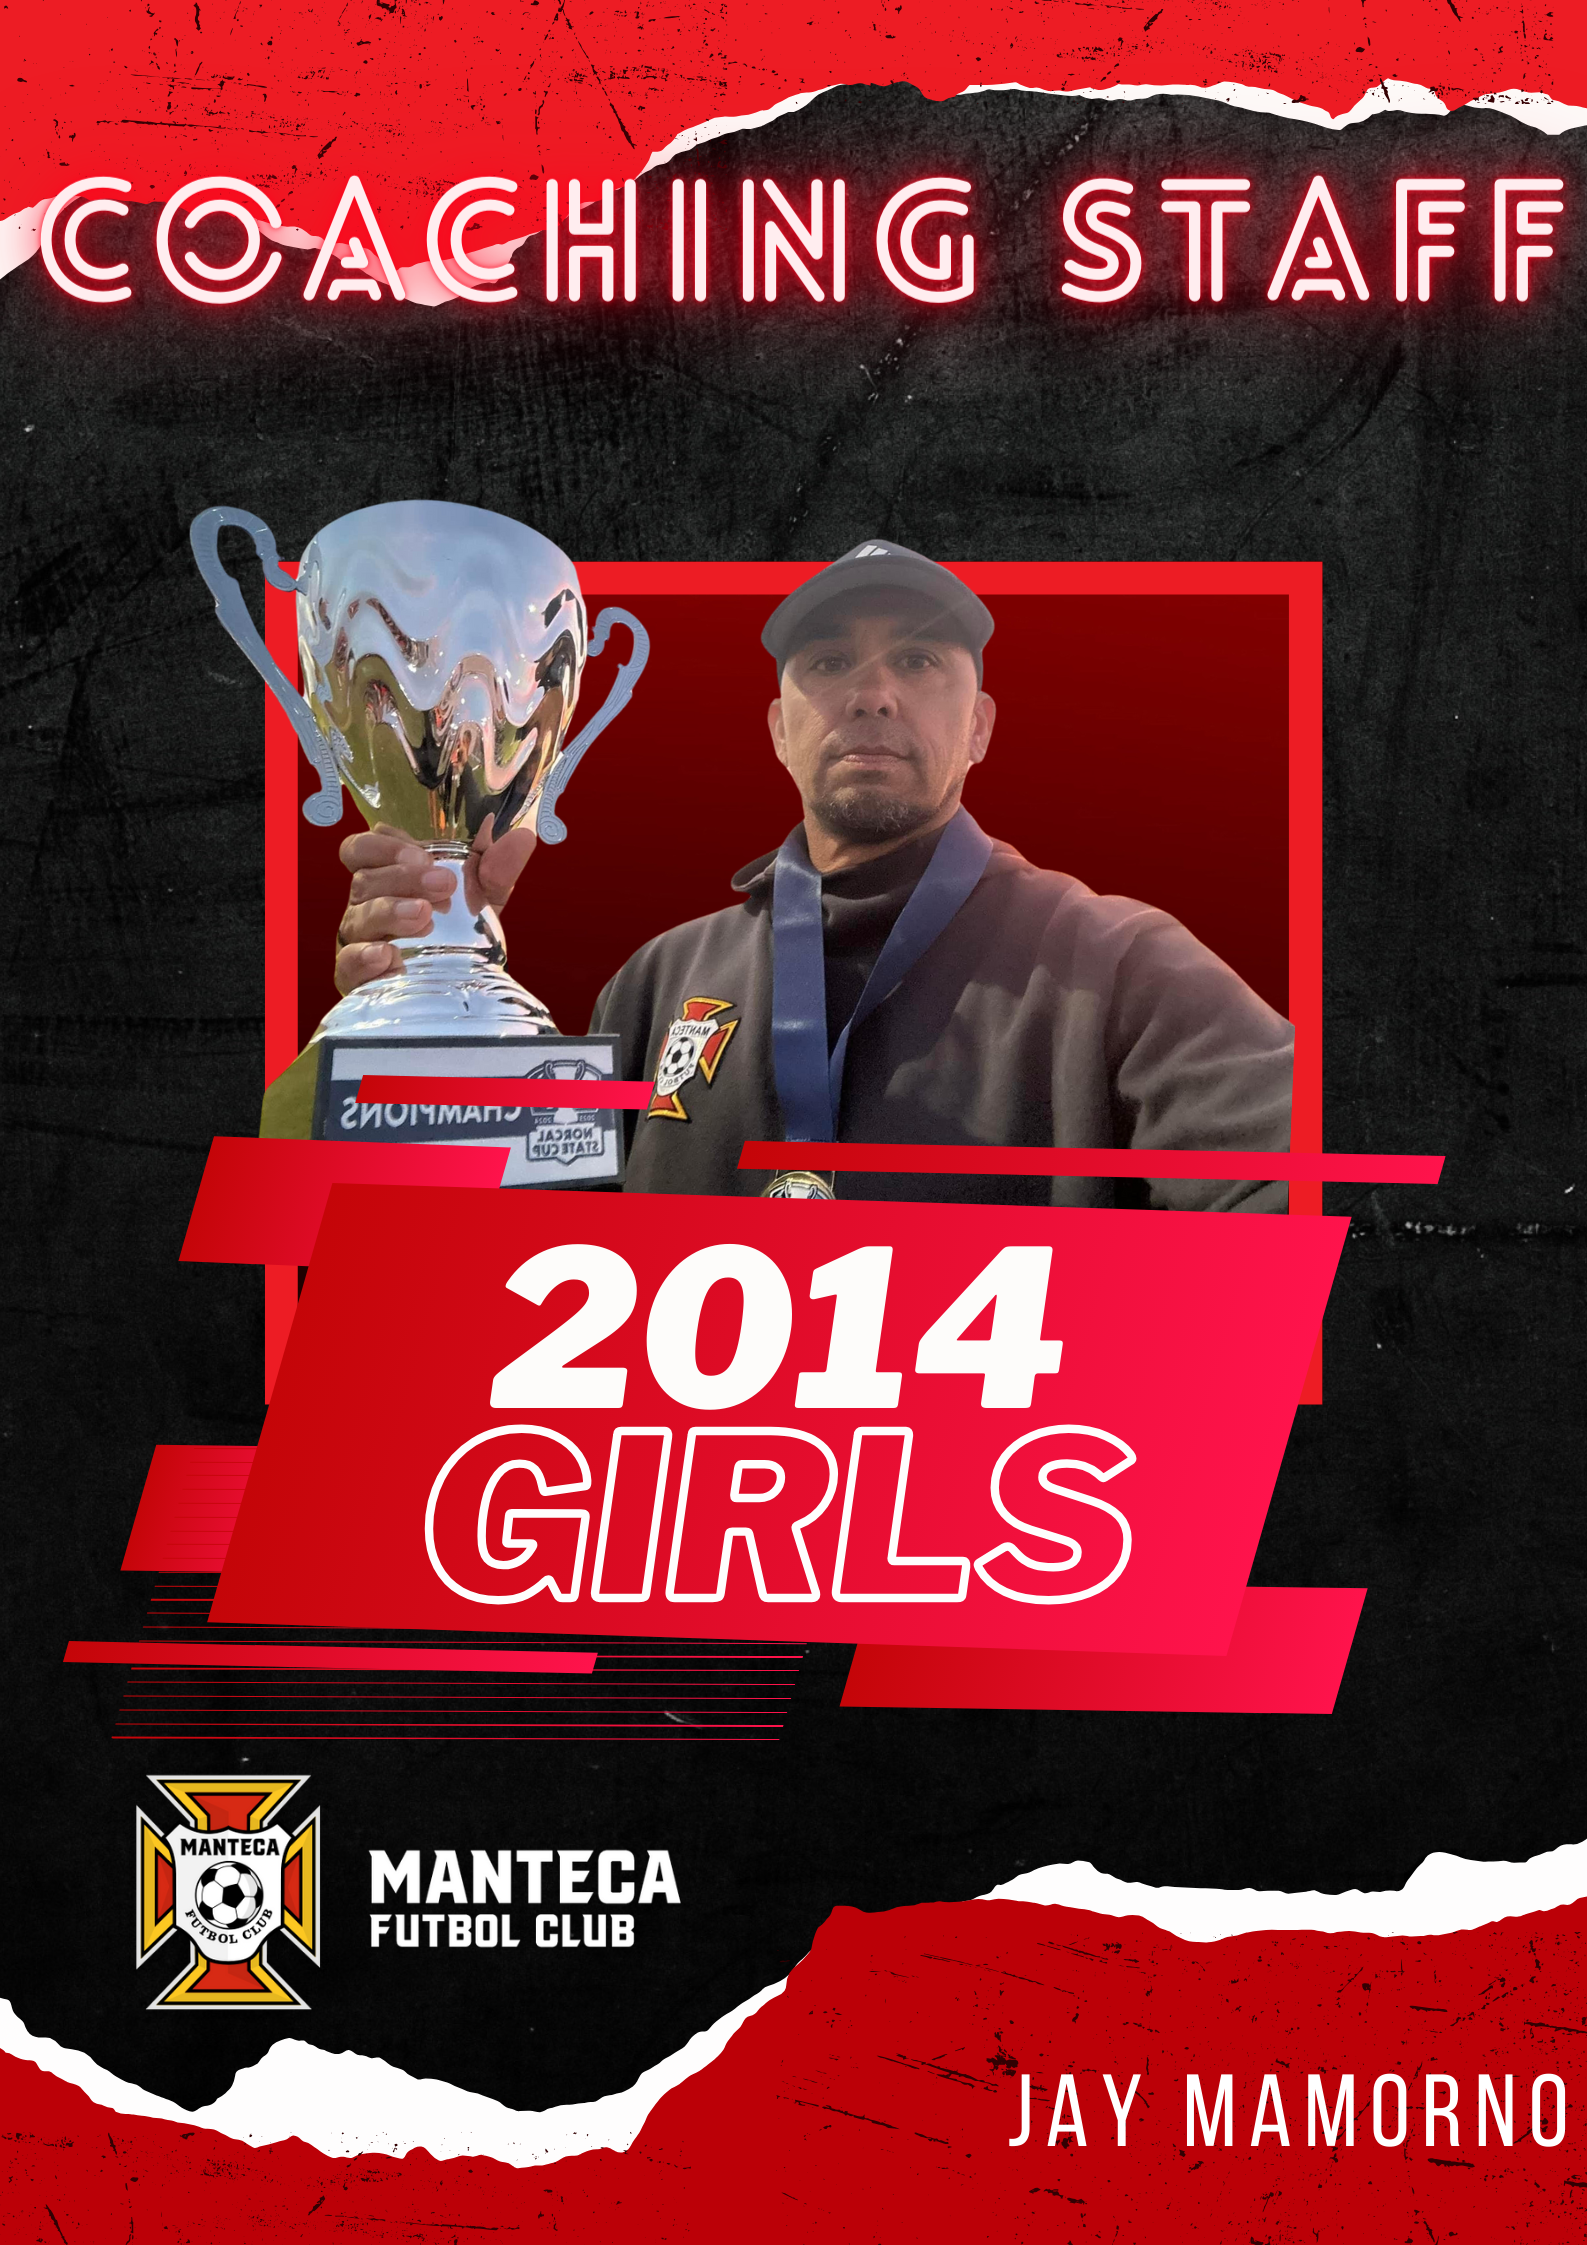 Manteca Futbol Club 14 Girls